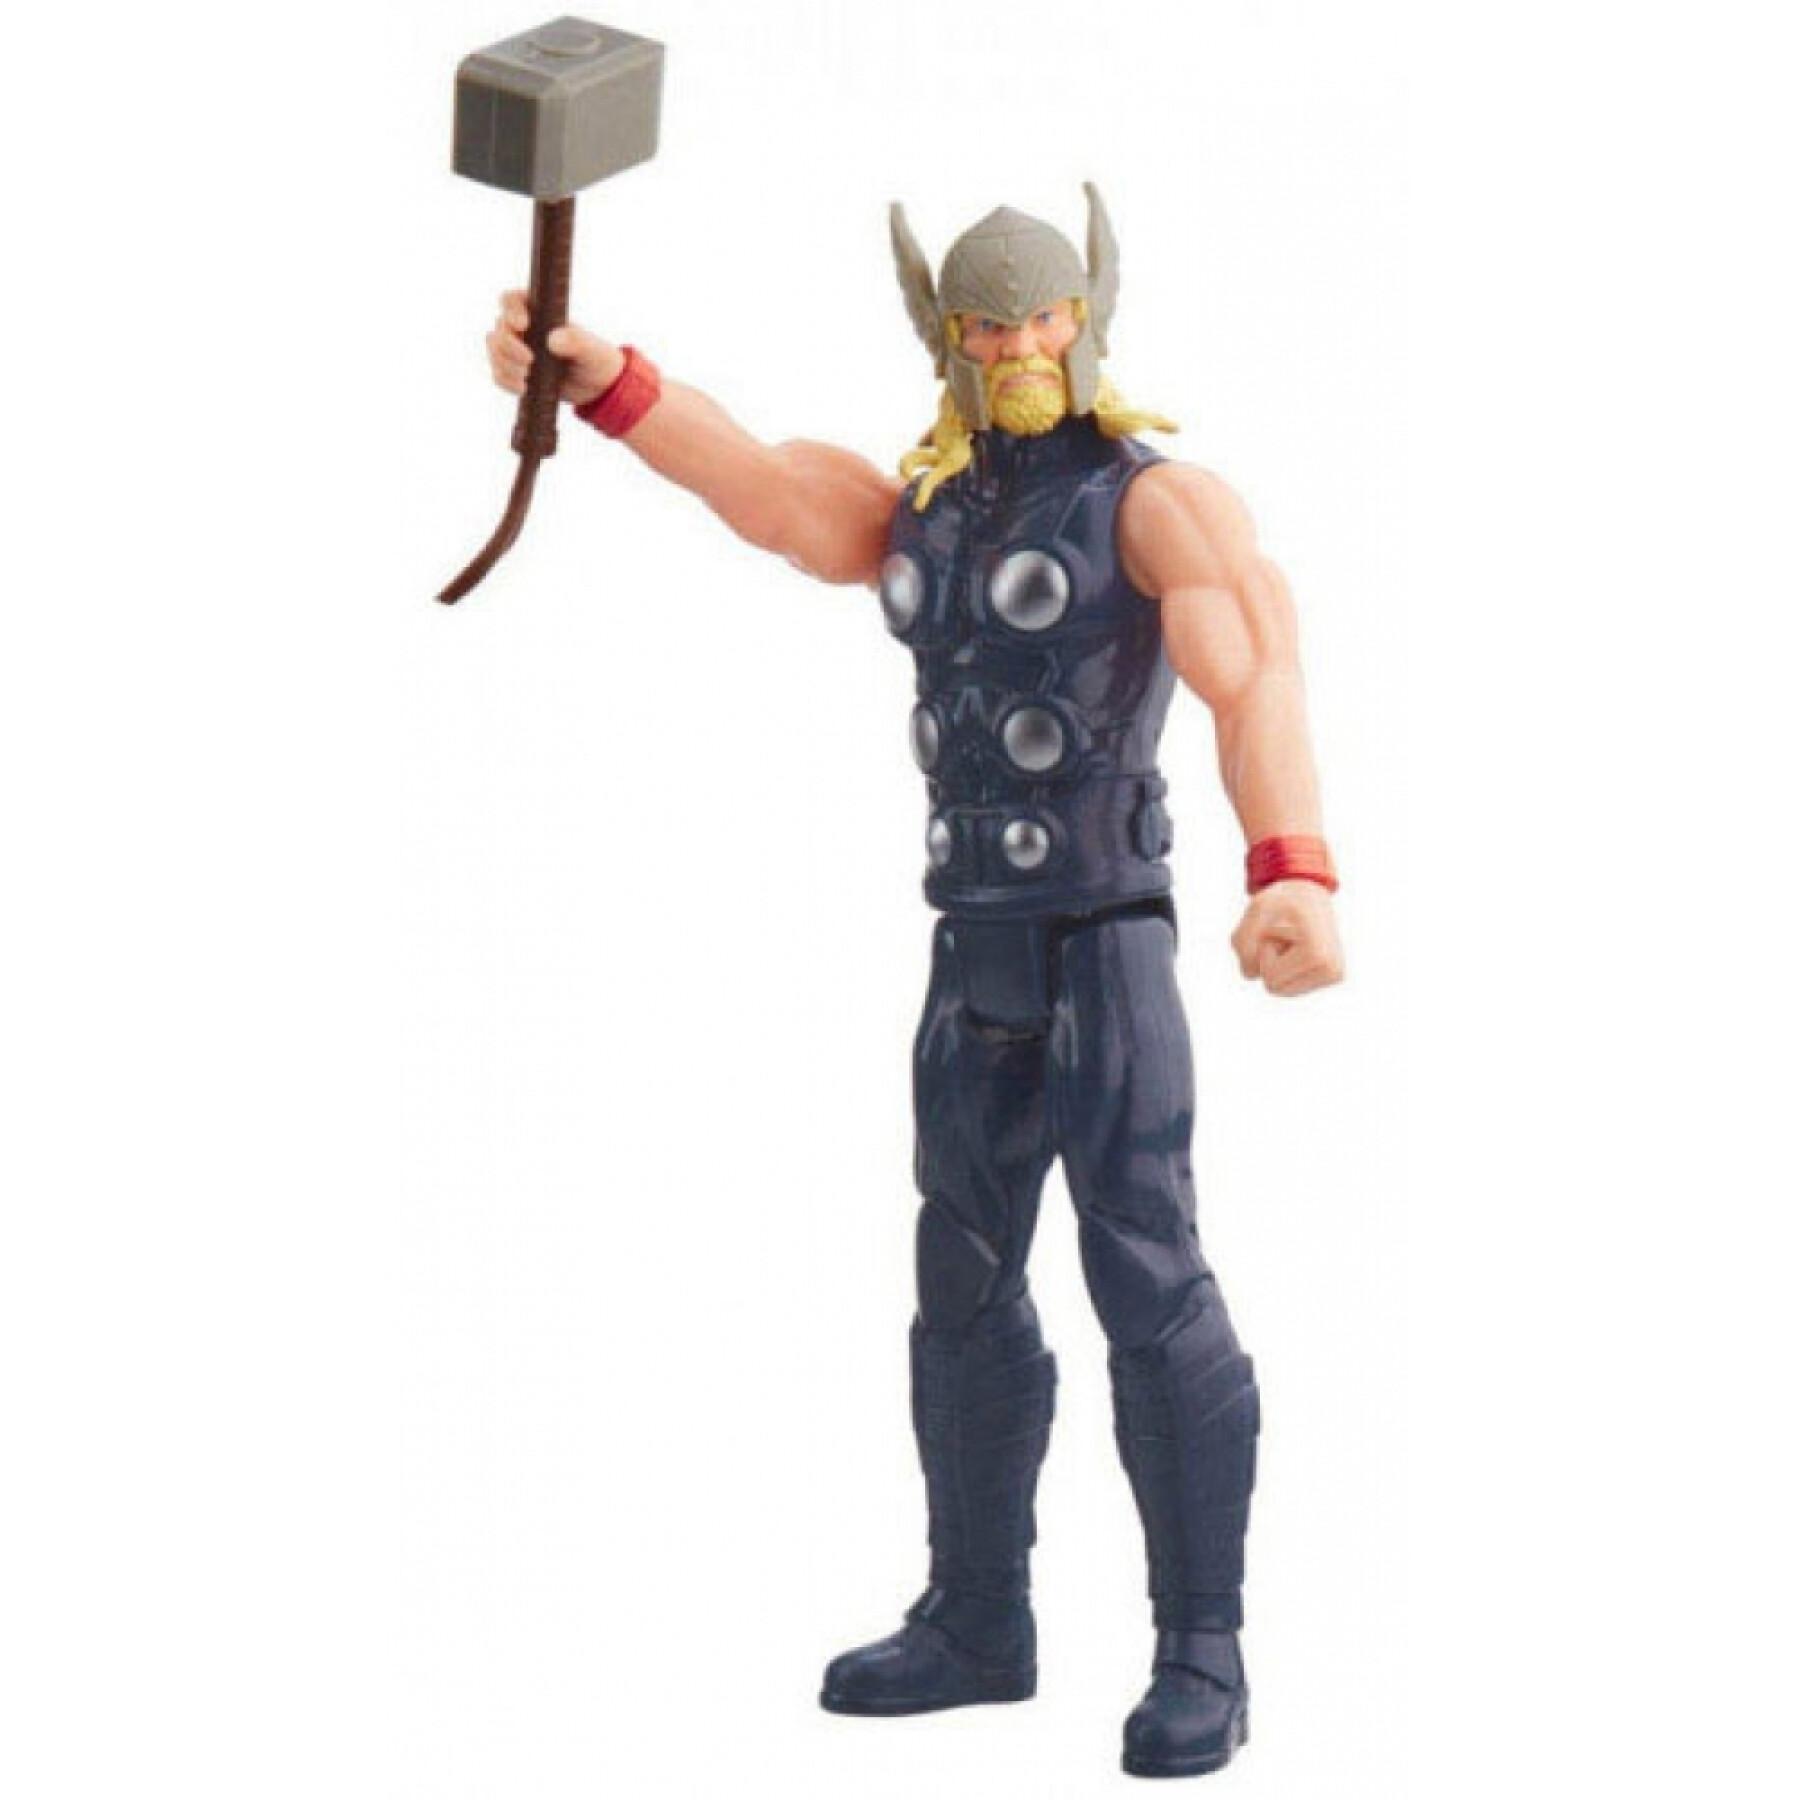 Figurina Avengers Titán Thor